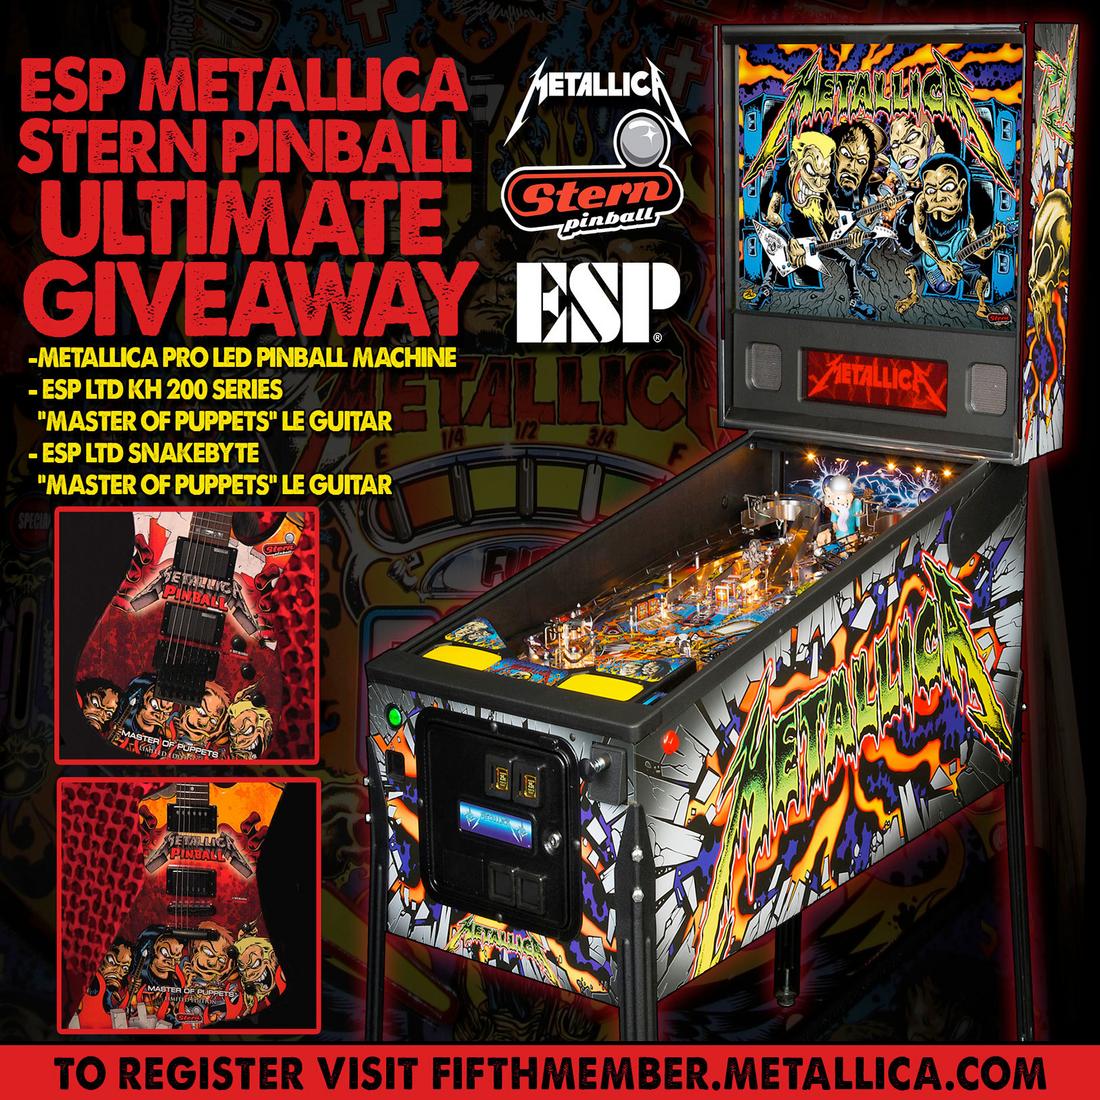 ESP Metallica Stern Pinball Ultimate Giveaway